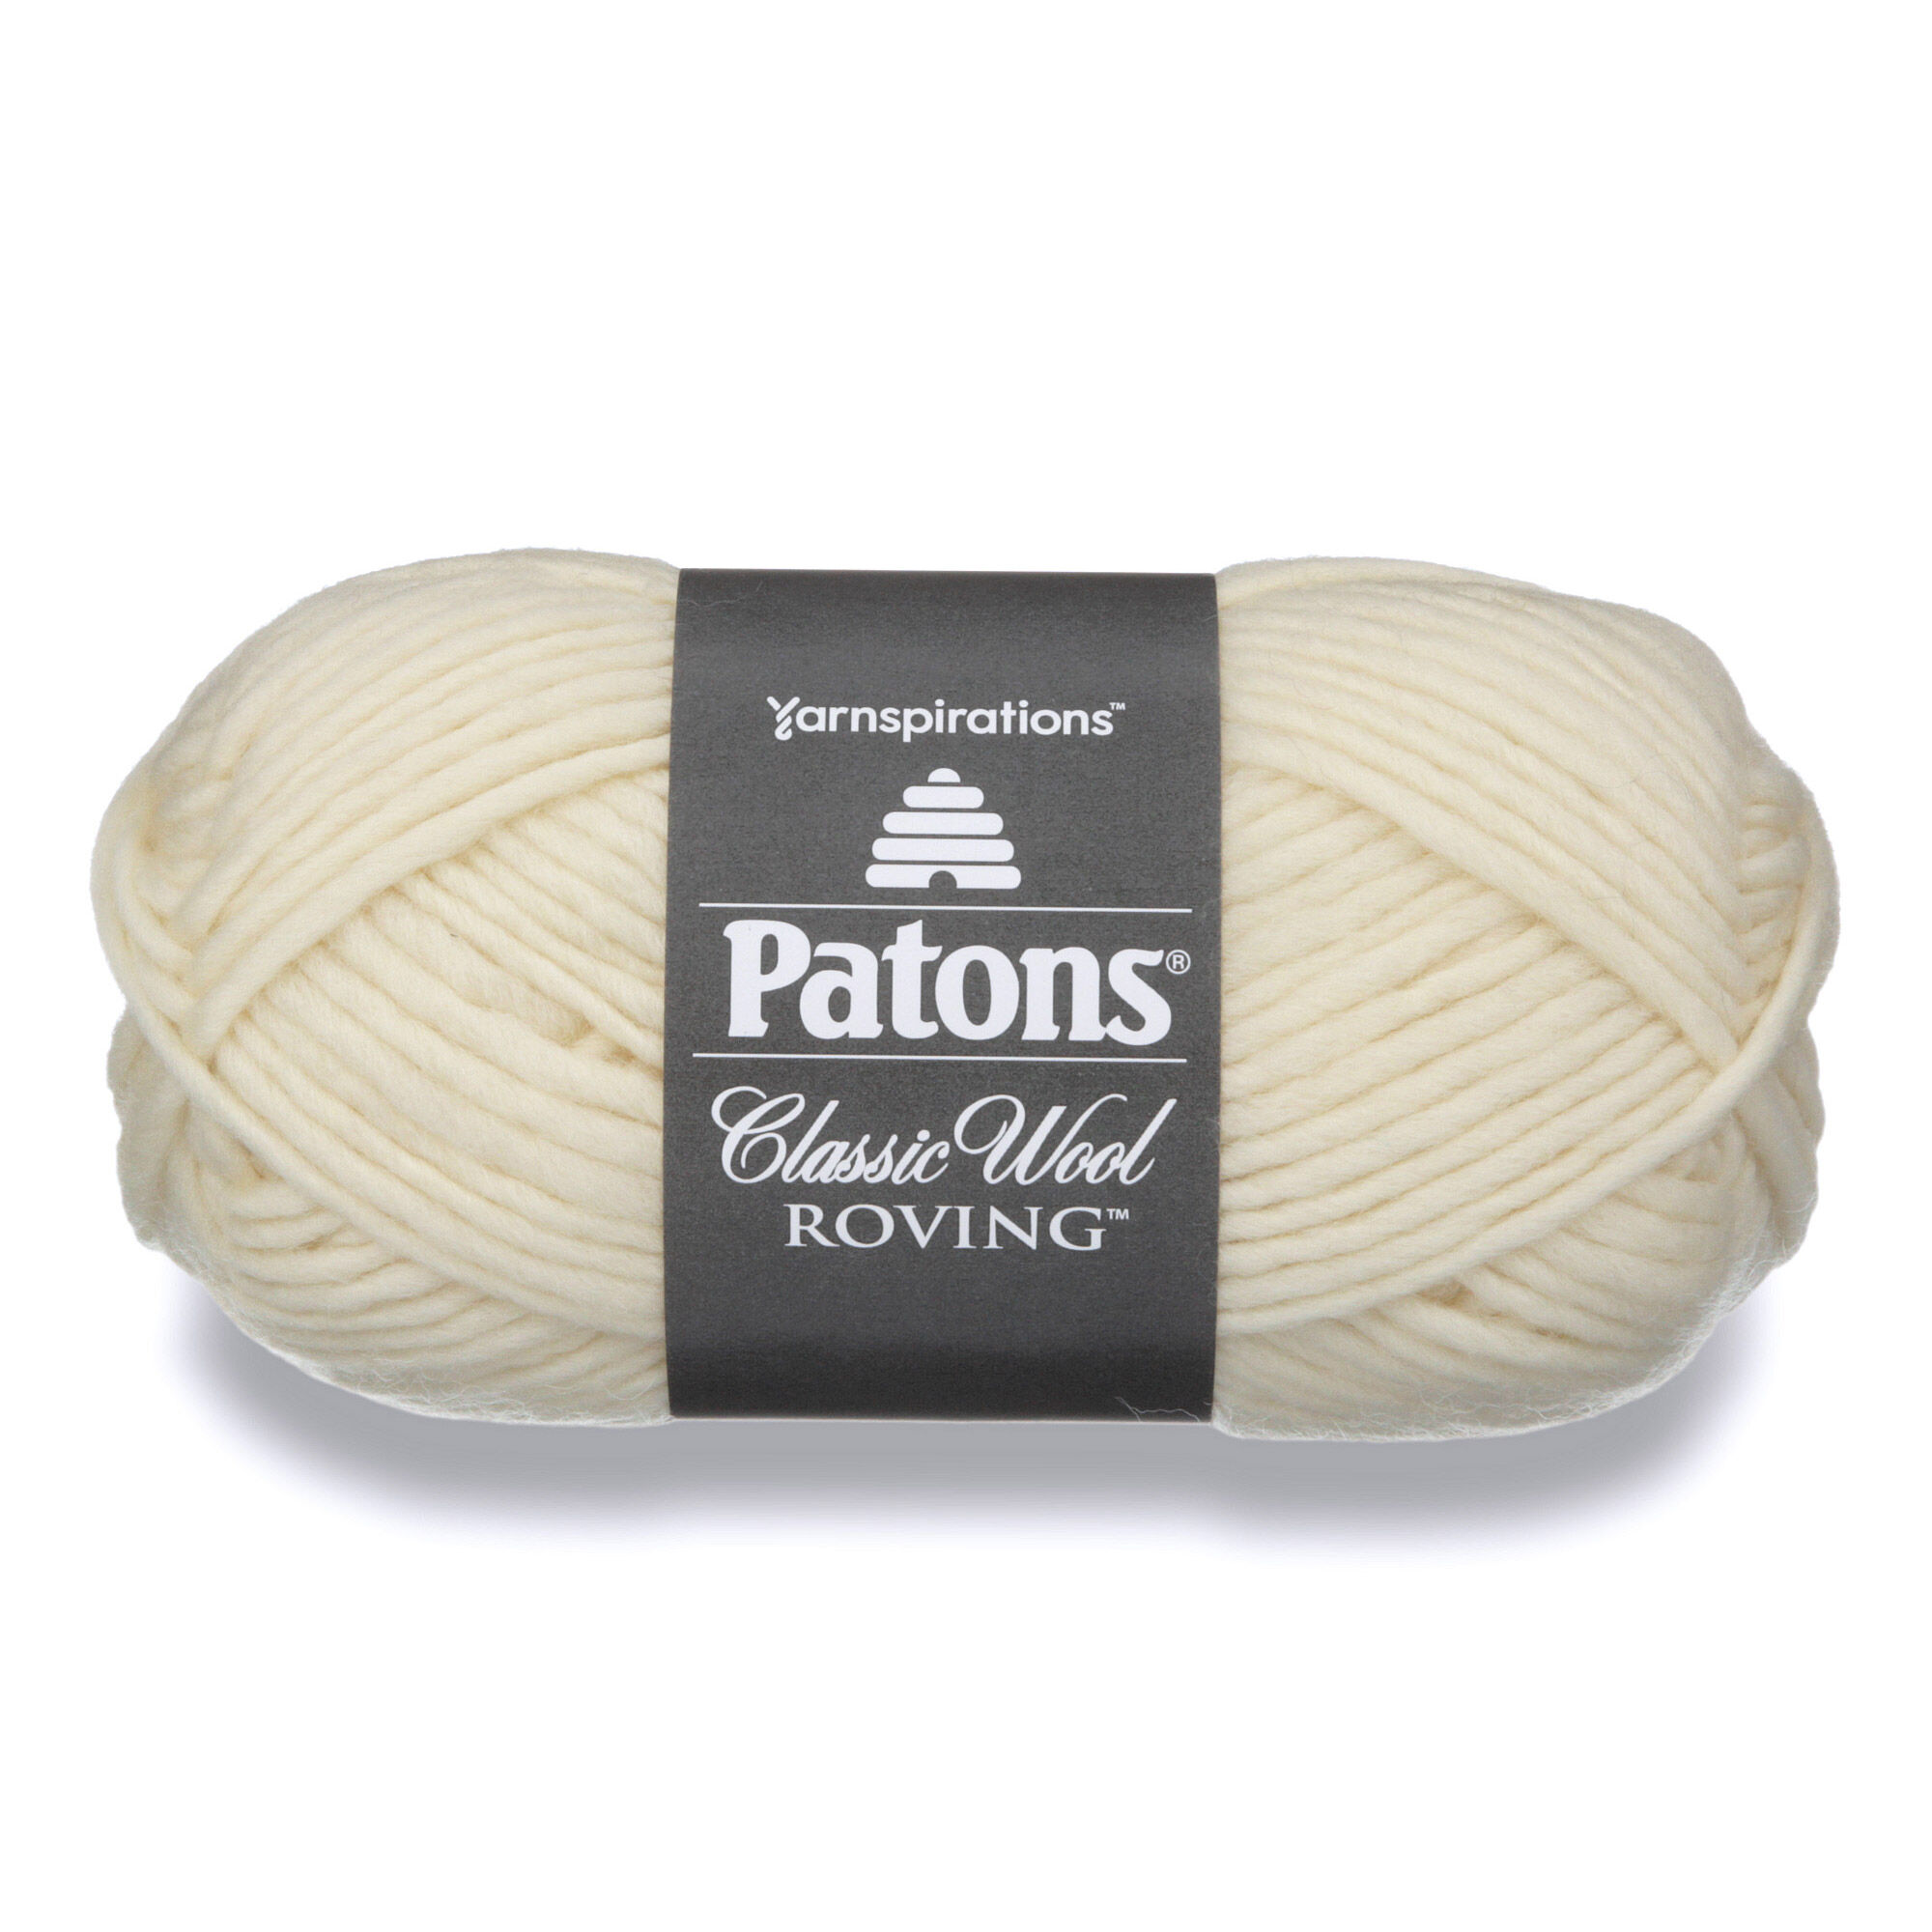 Patons wool roving yarn